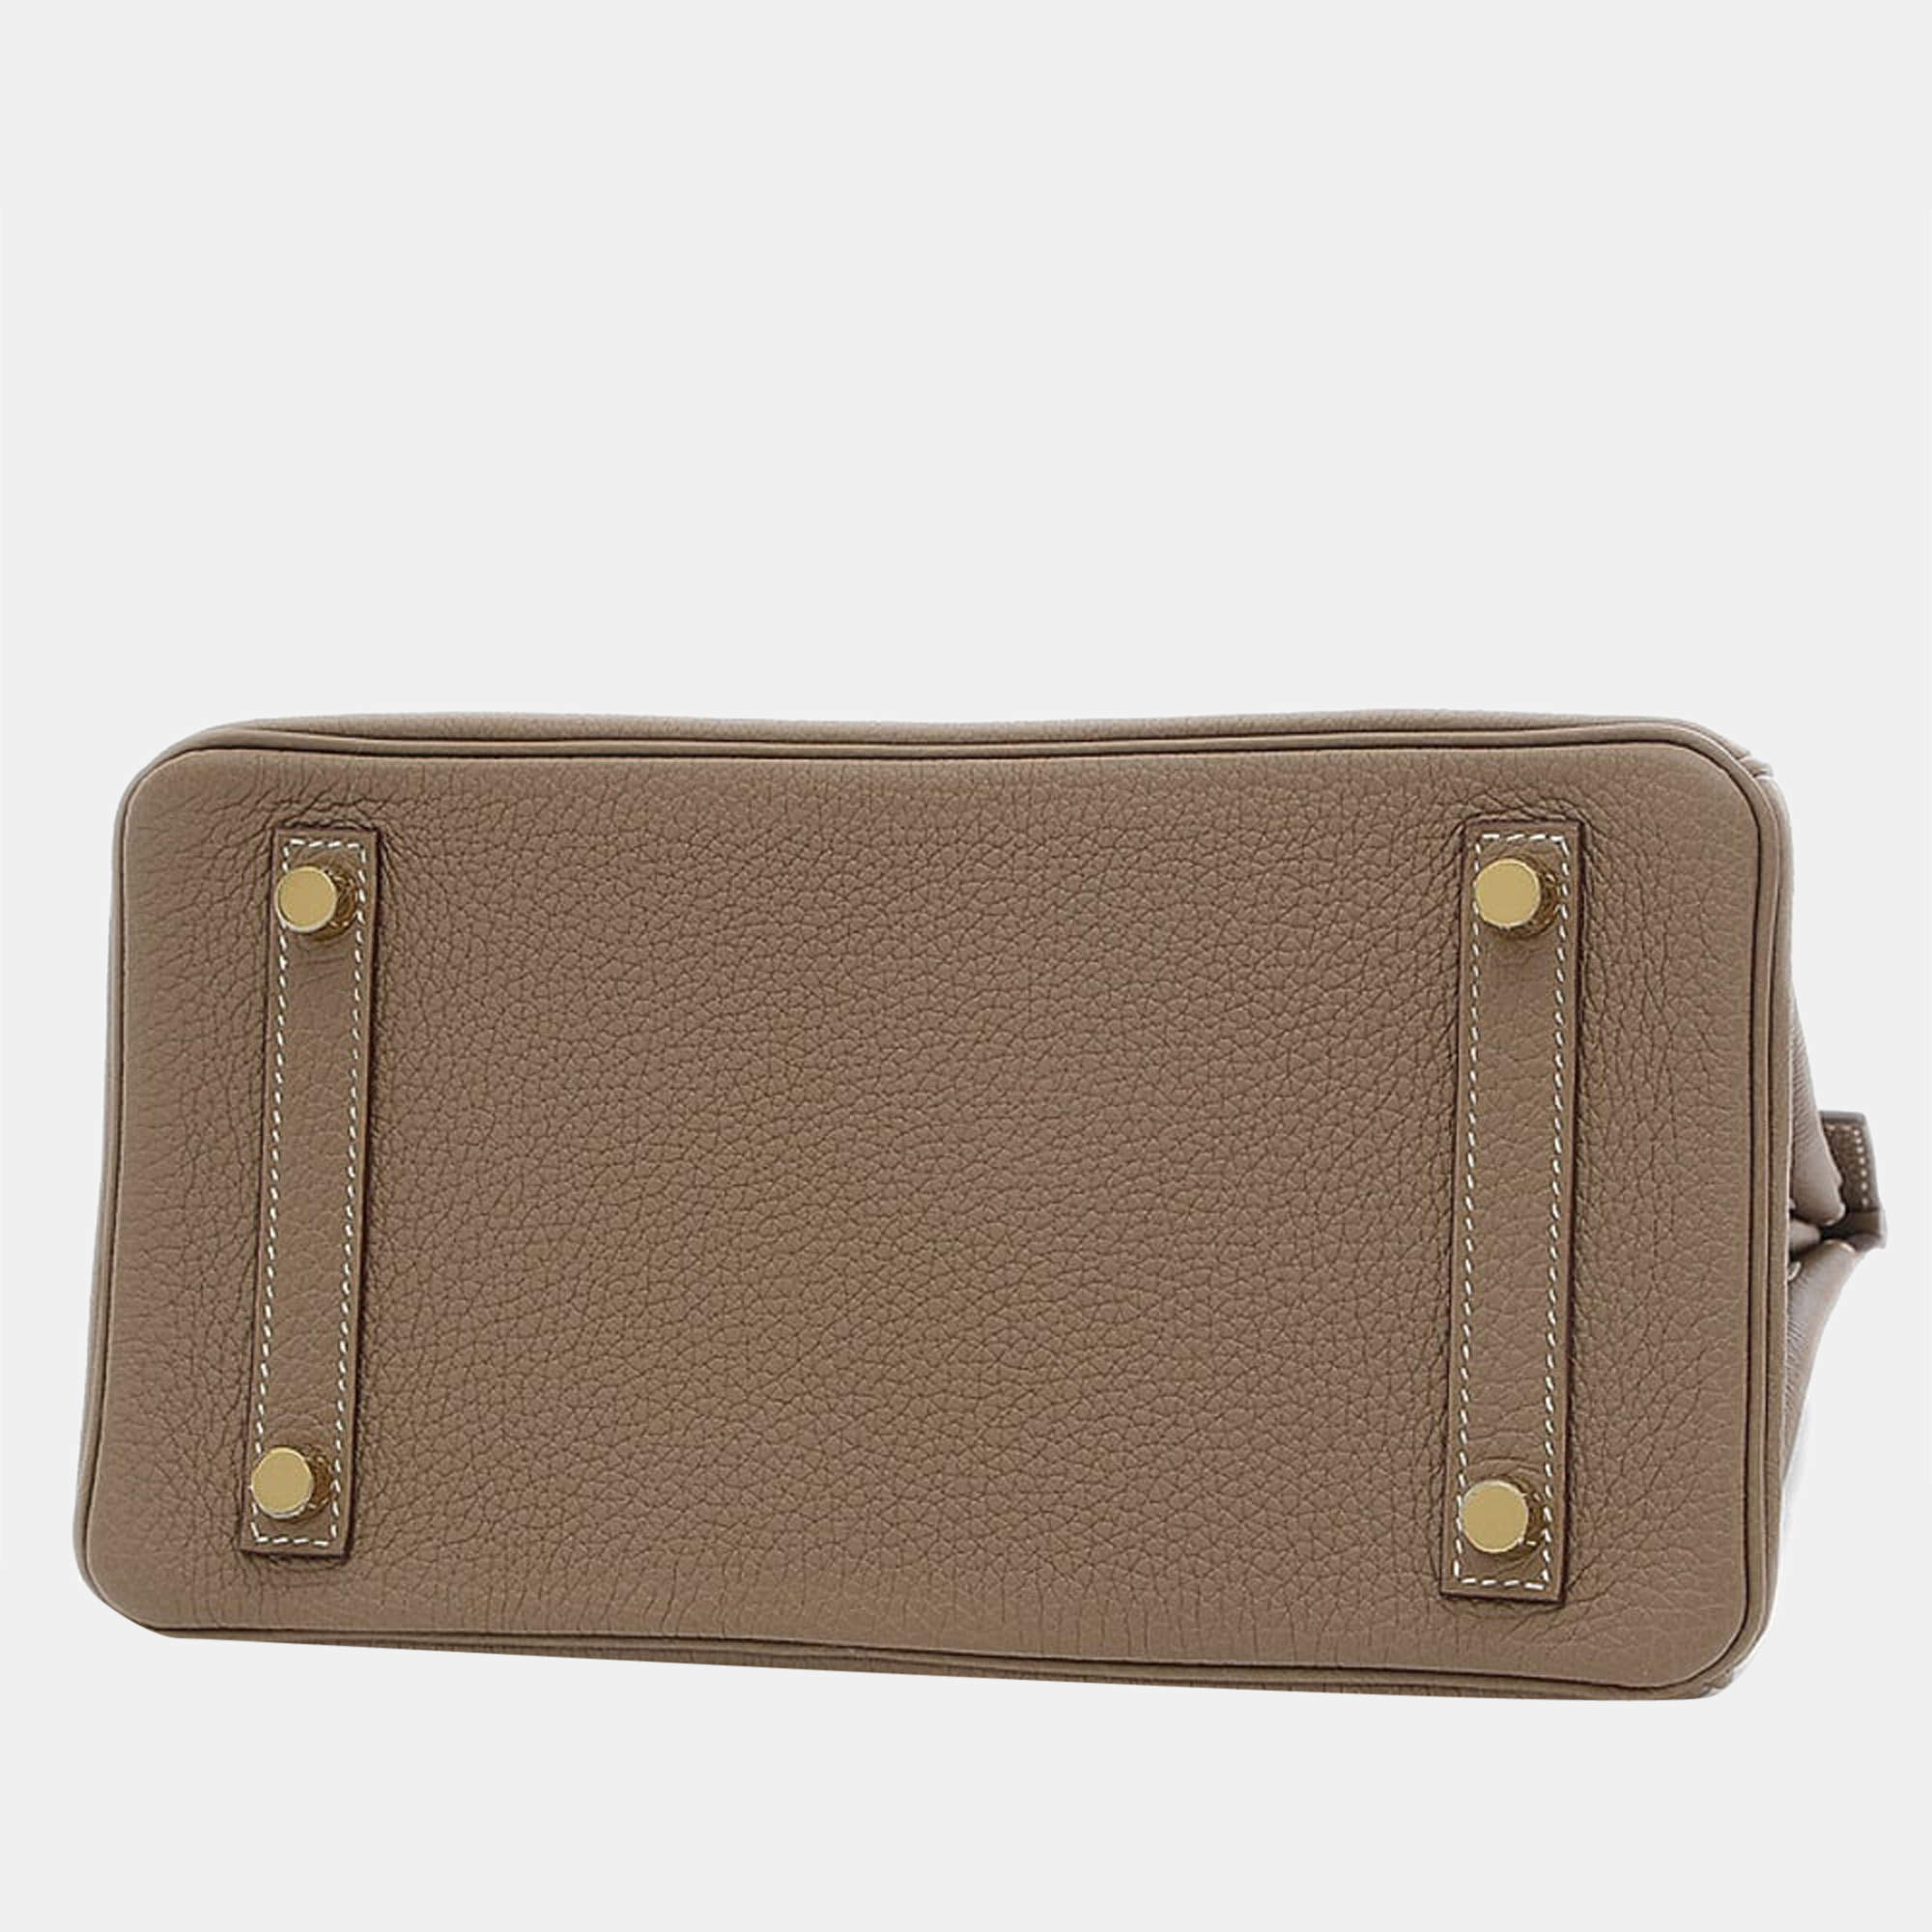 Hermès Birkin 25 Togo Leather Handbag-Capucine Gold Hardware